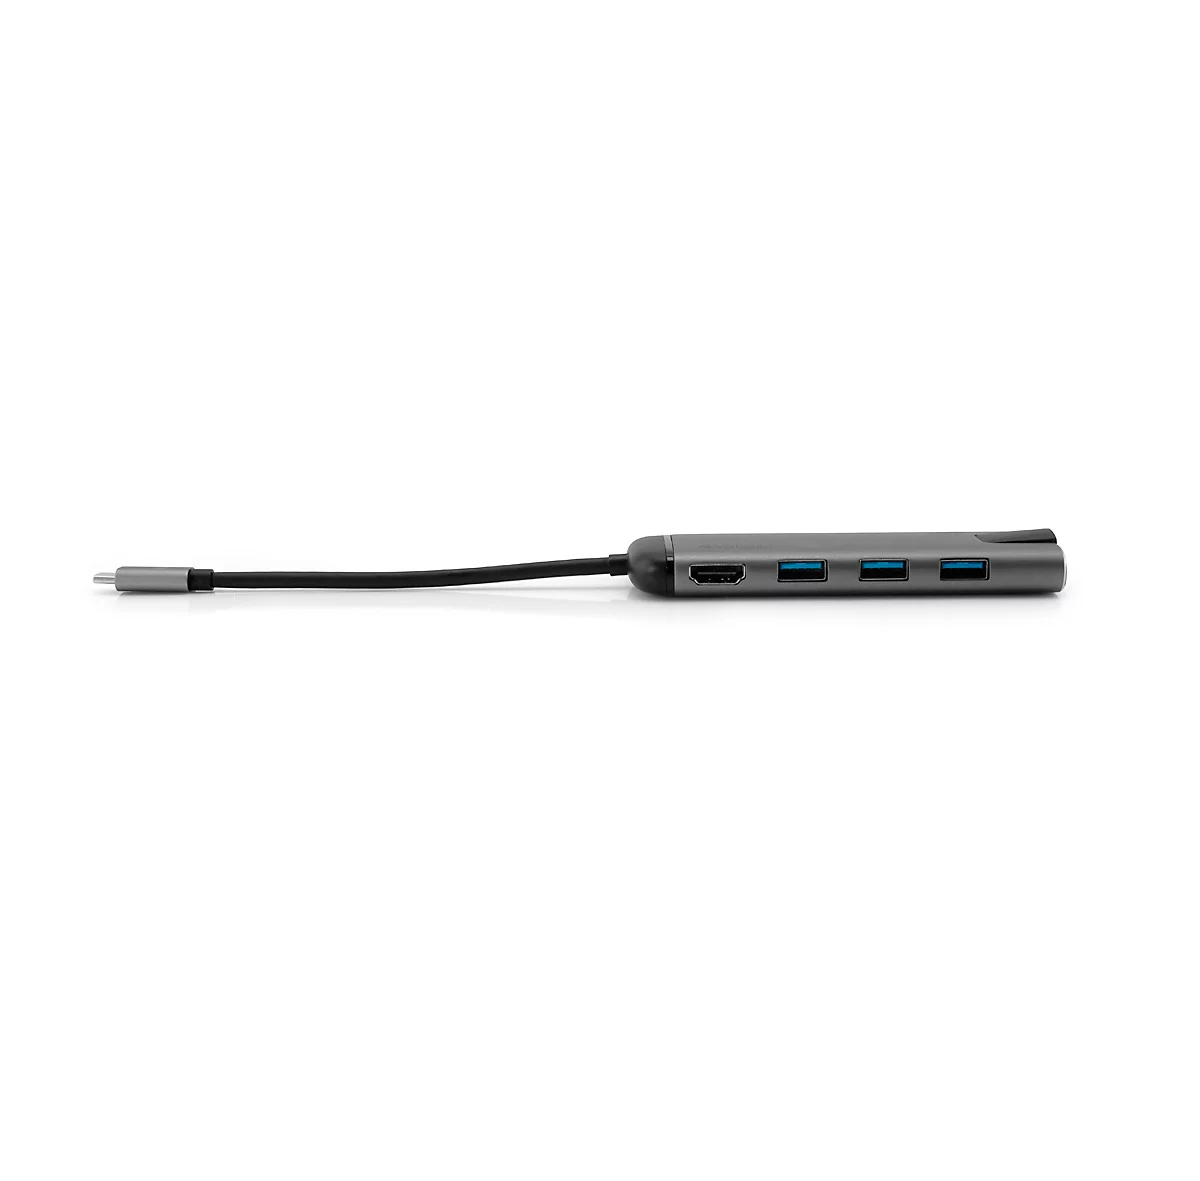 Verbatim USB-C™ Multiport-Hub, USB-C, 3x USB 3.0, HDMI, Gigabit Ethernet, SD/microSD, Kabellänge 15 cm